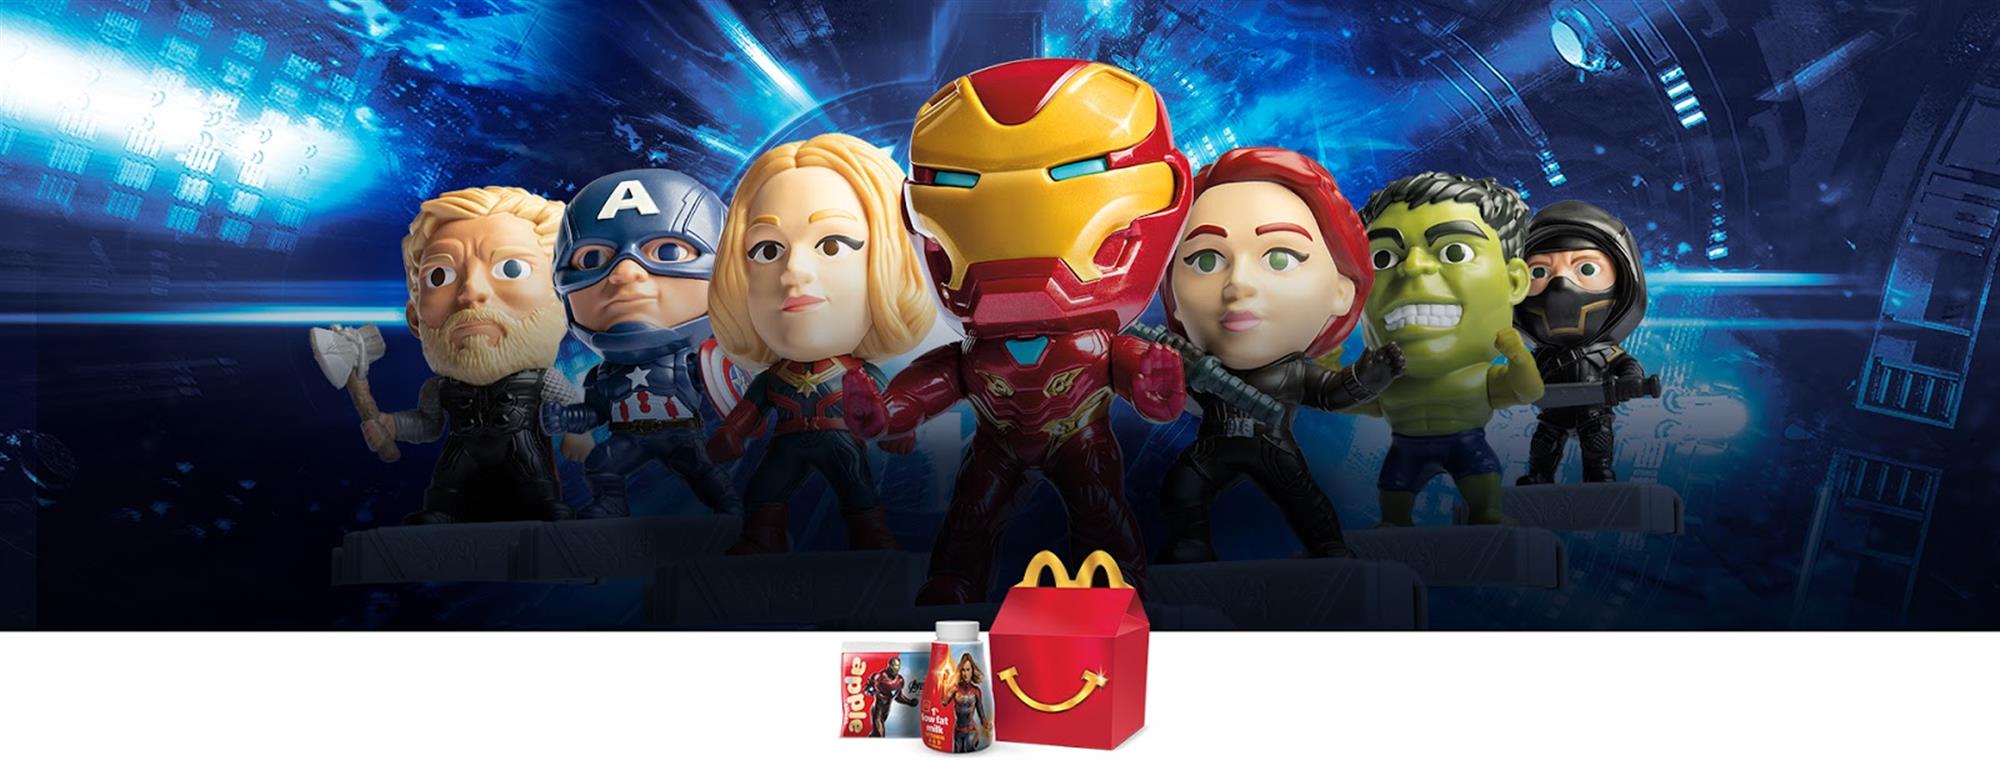 2019 McDonald's Happy Meal Toys Marvel Avengers Endgame #19 Groot New Sealed 